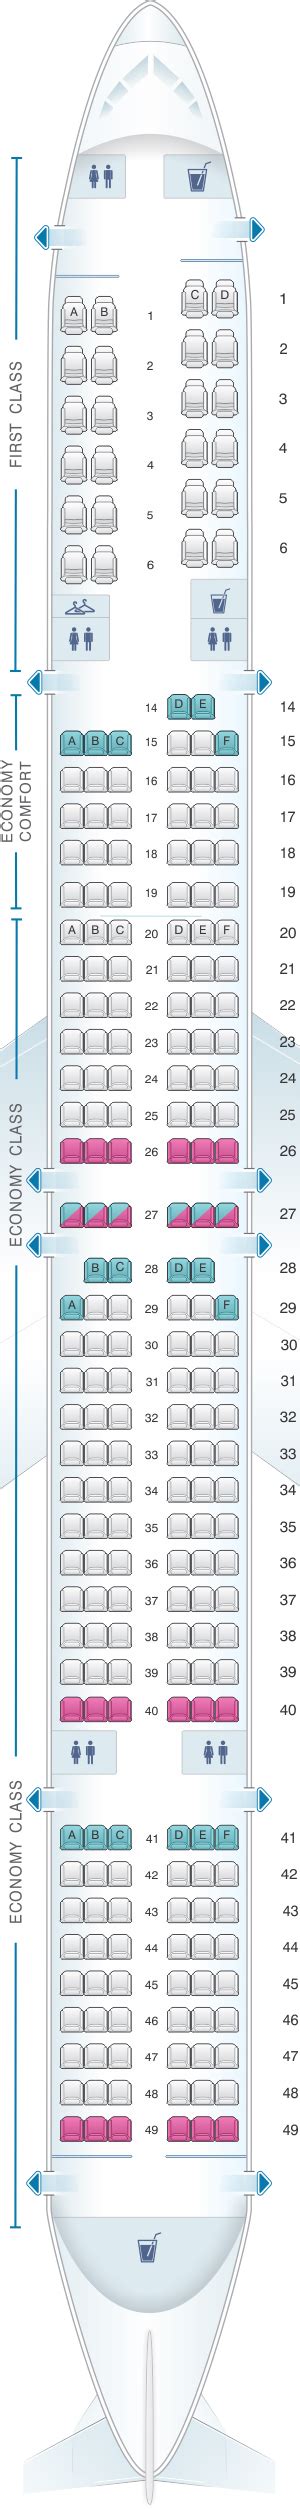 Delta 757 300 Seat Chart Elcho Table